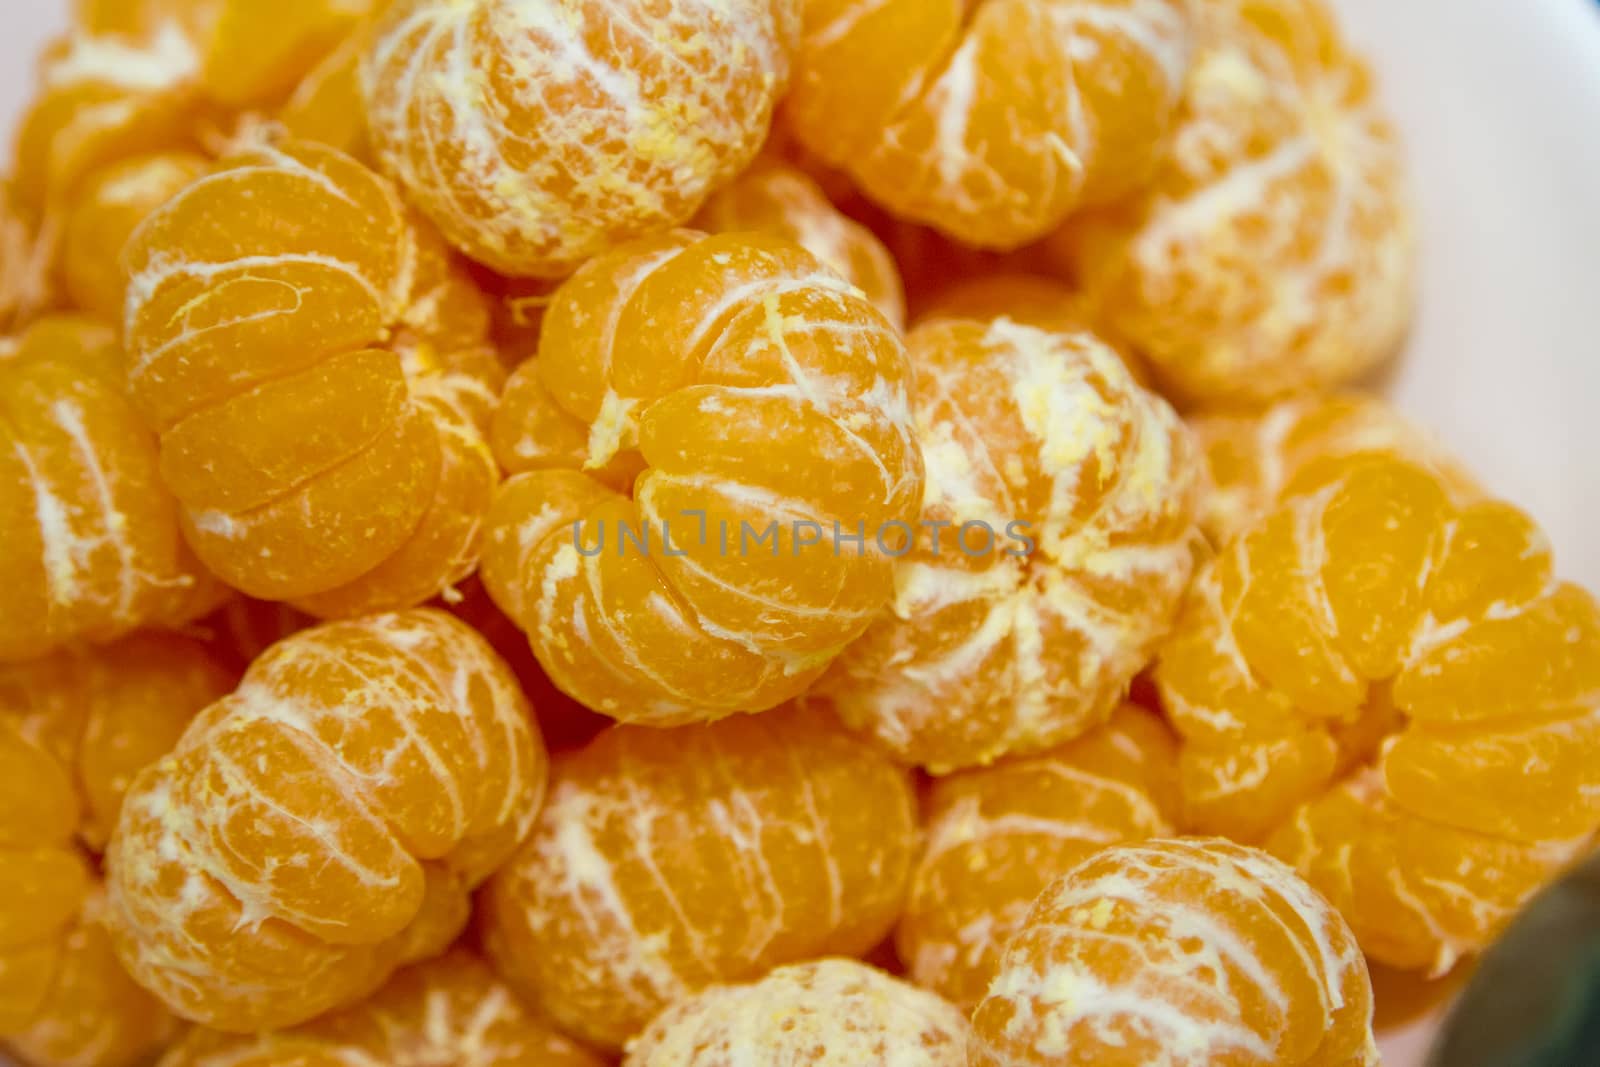 Orange peel many fruits. by TakerWalker